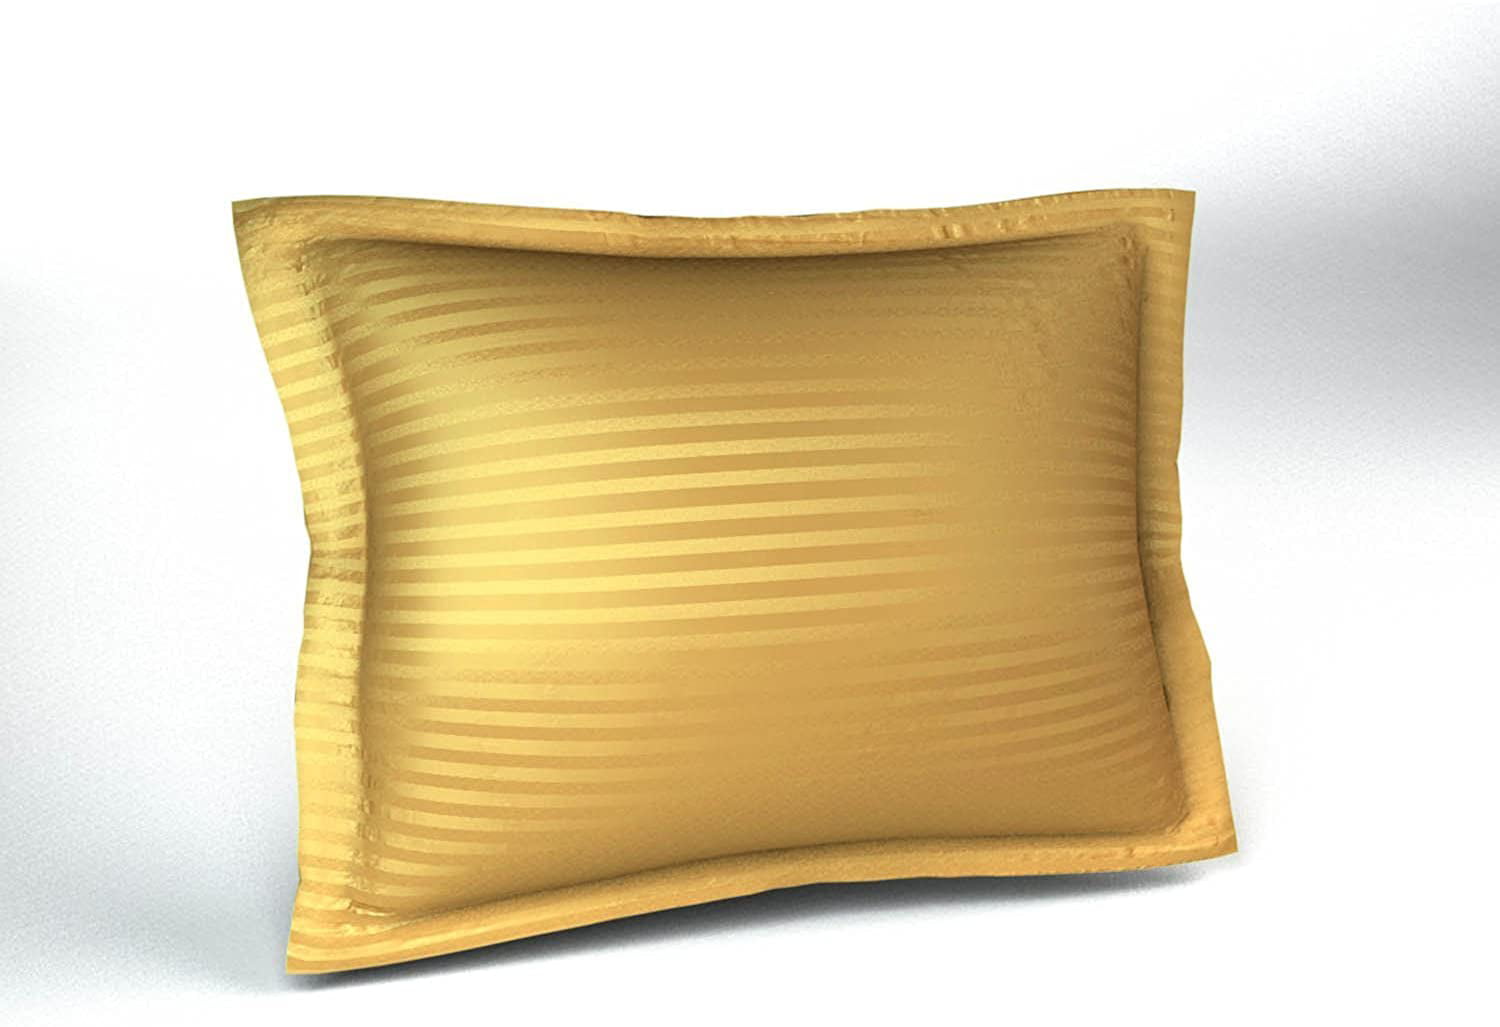 Harmony Lane Sateen Stripe Tailored Pillow Sham 